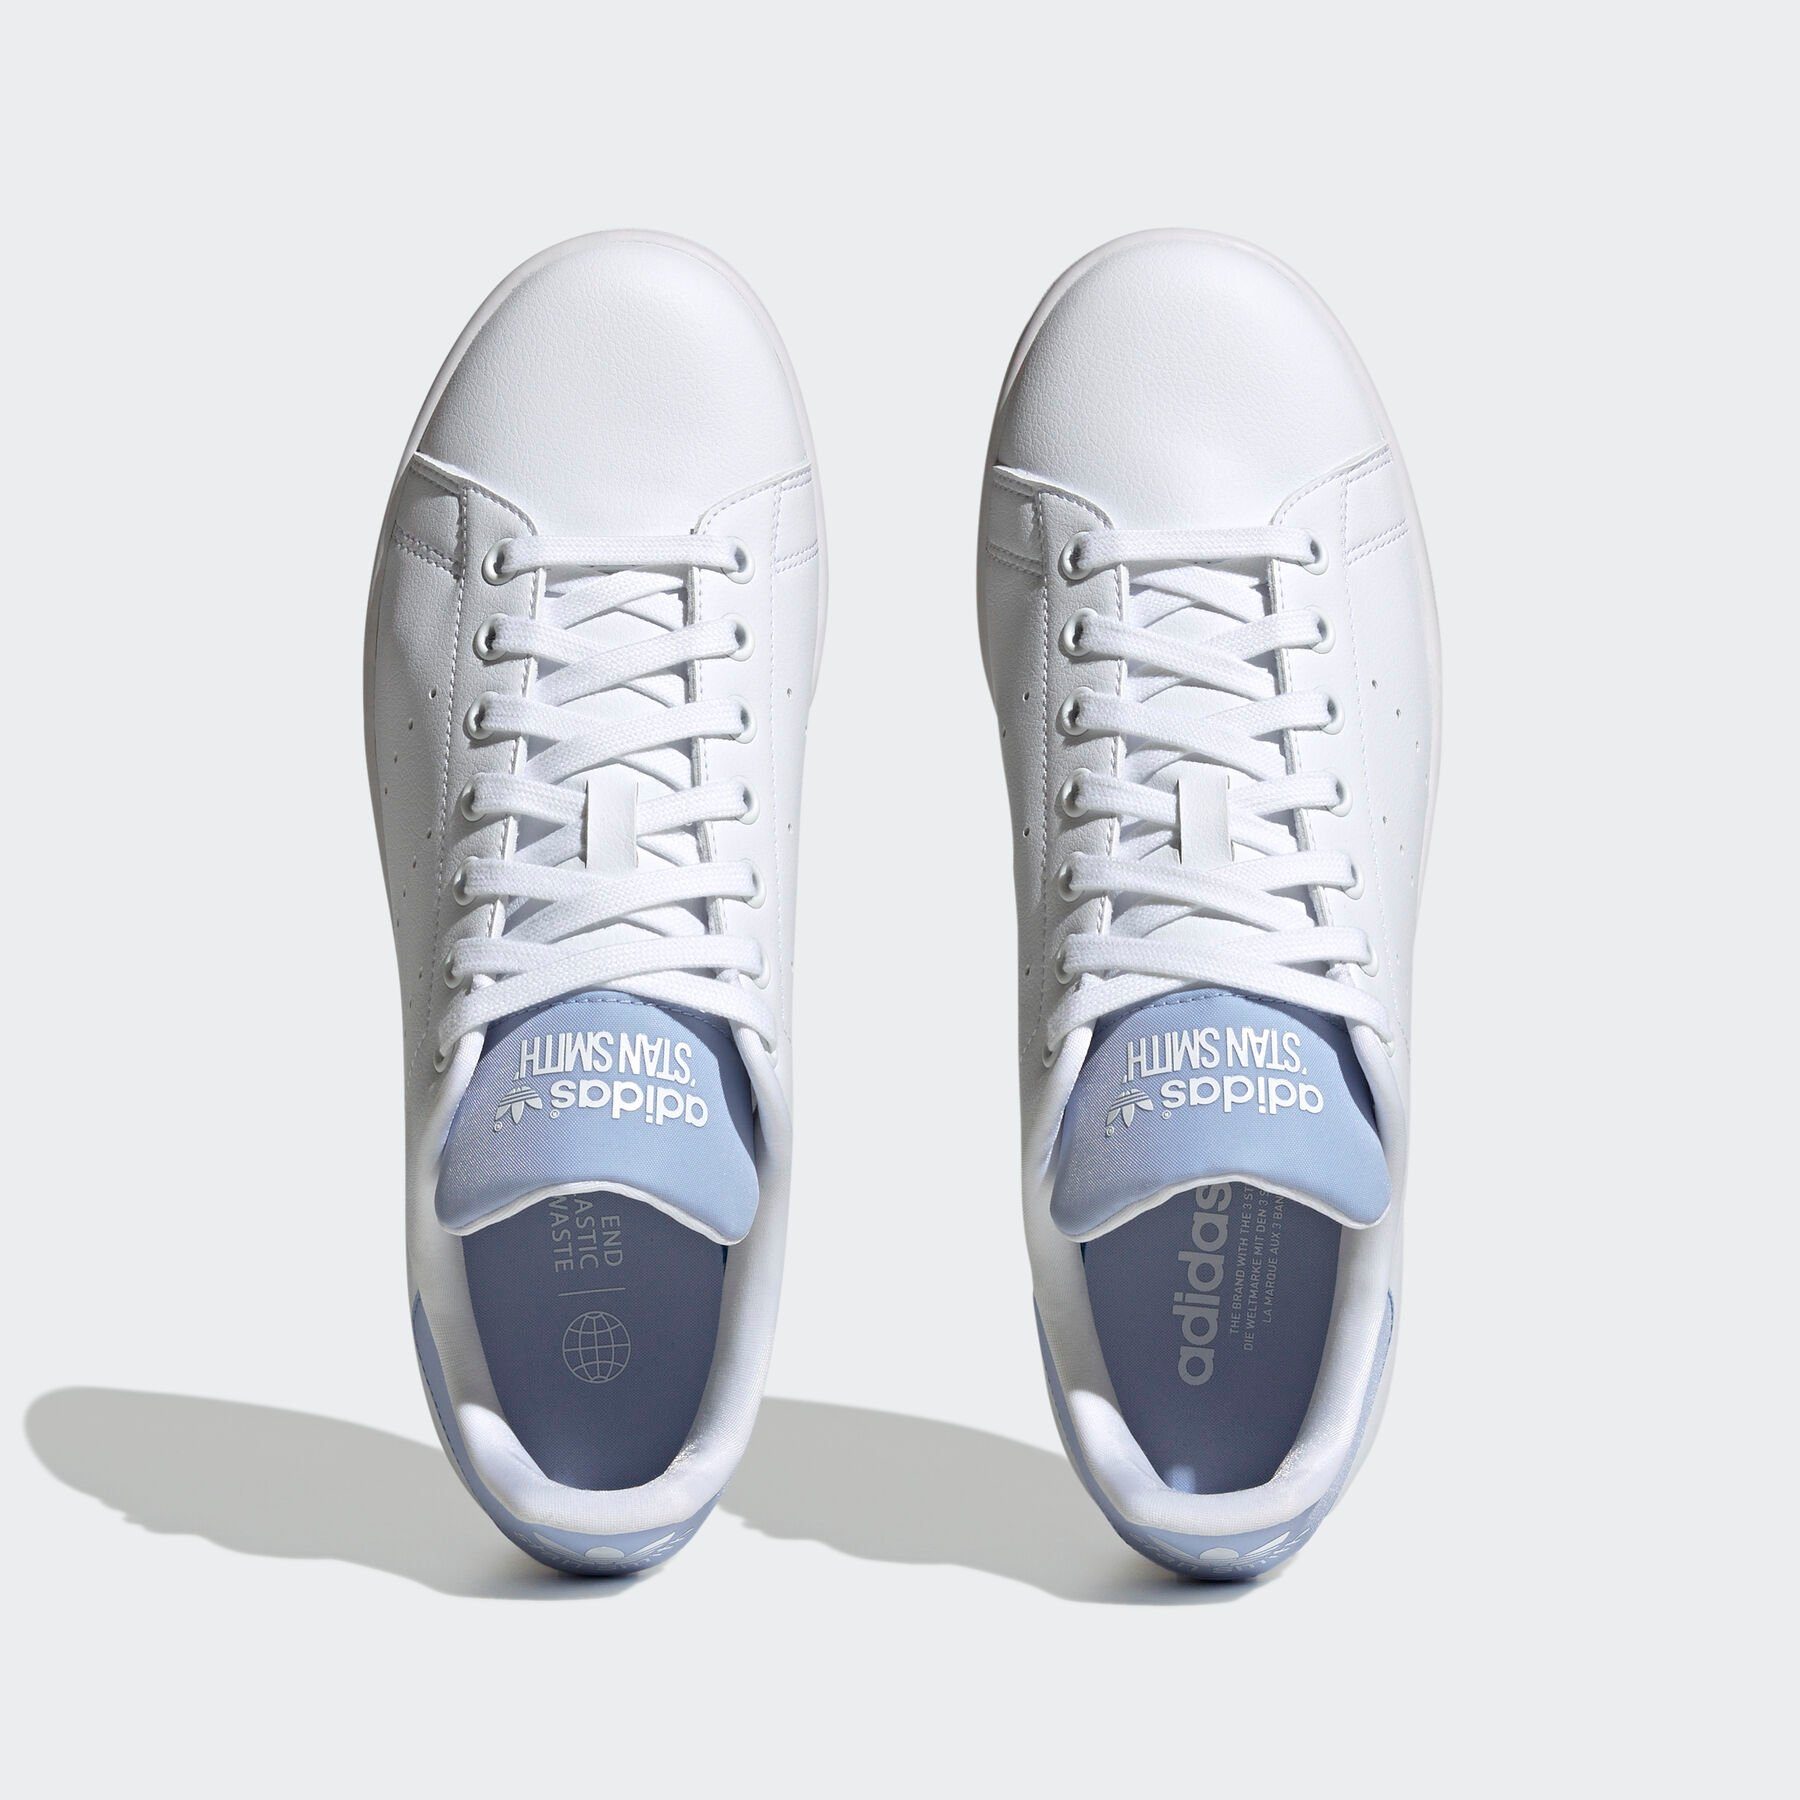 adidas / SMITH Dawn Blue White STAN Originals / Cloud White Sneaker Cloud